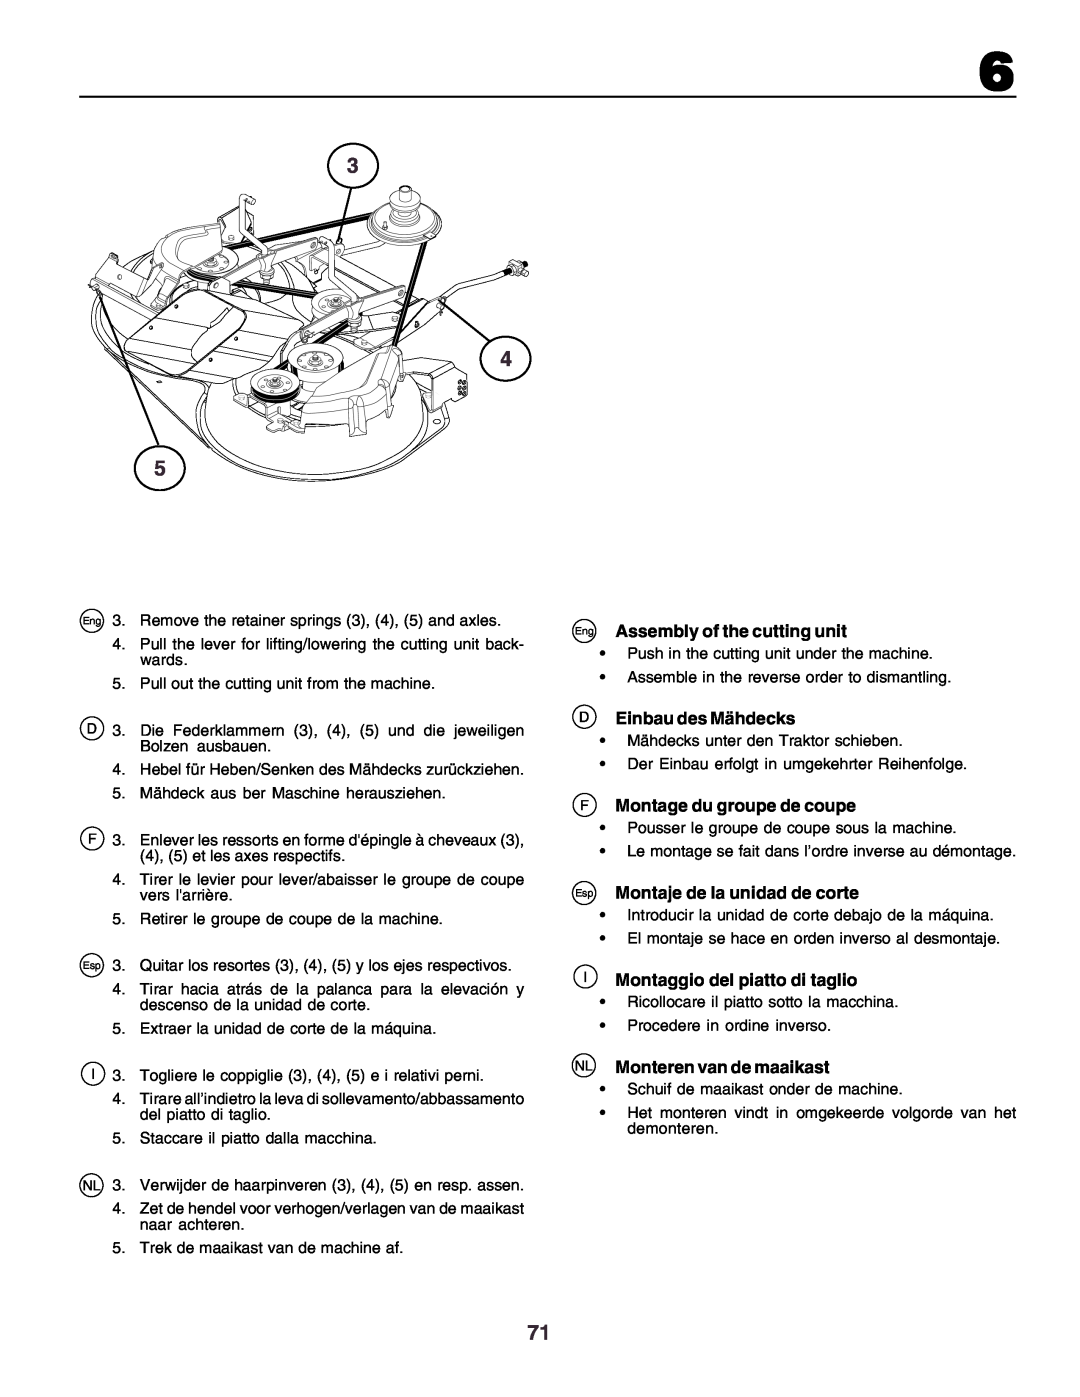 Husqvarna CT130 instruction manual Eng Assembly of the cutting unit, Einbau des Mähdecks, F Montage du groupe de coupe 